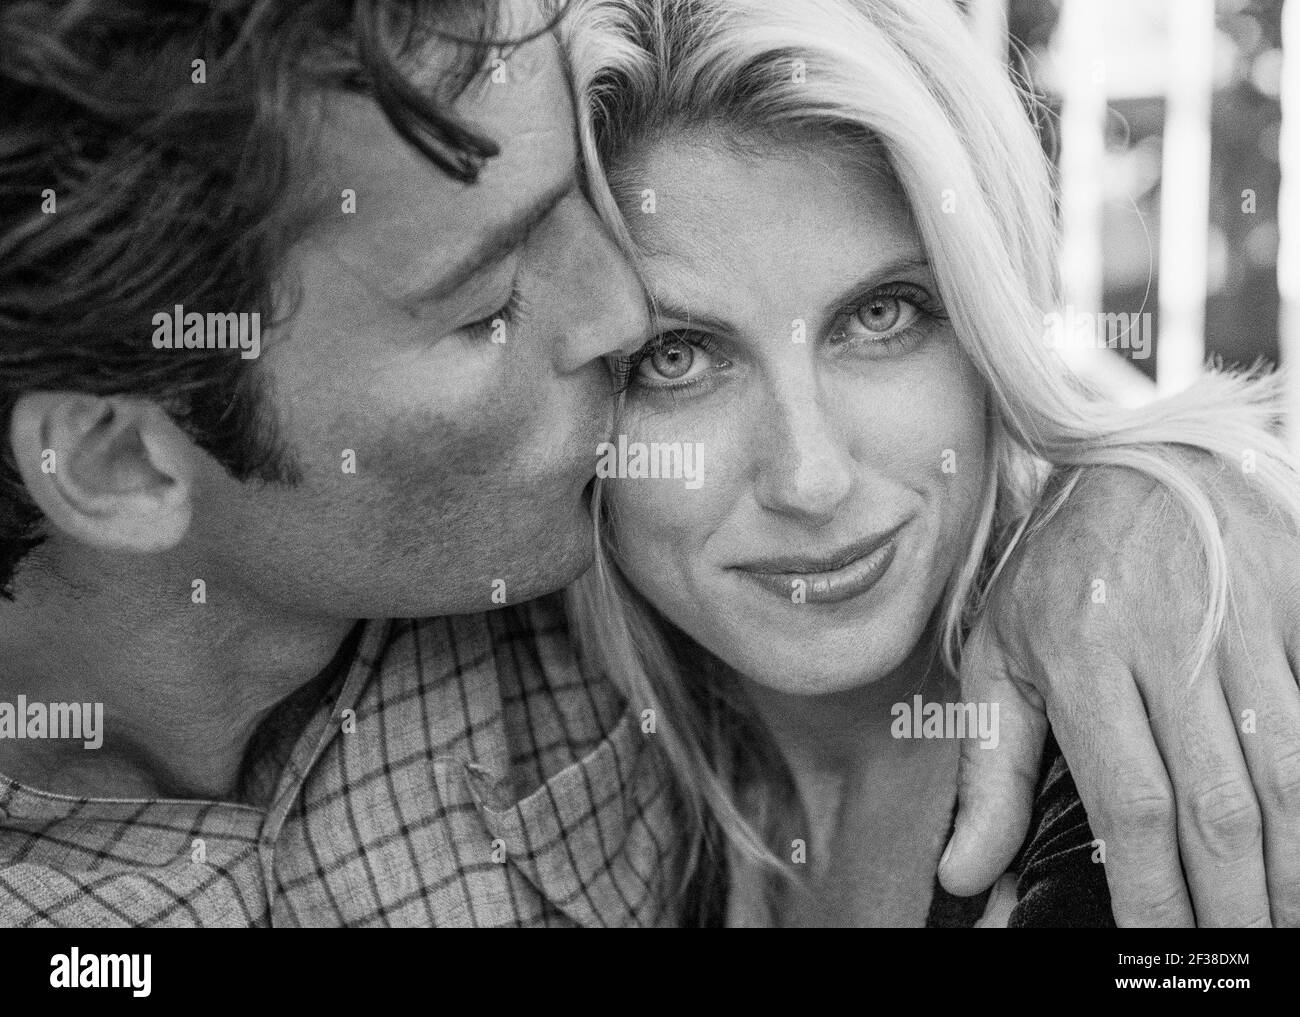 A Man kissing woman on the cheek. Stock Photo